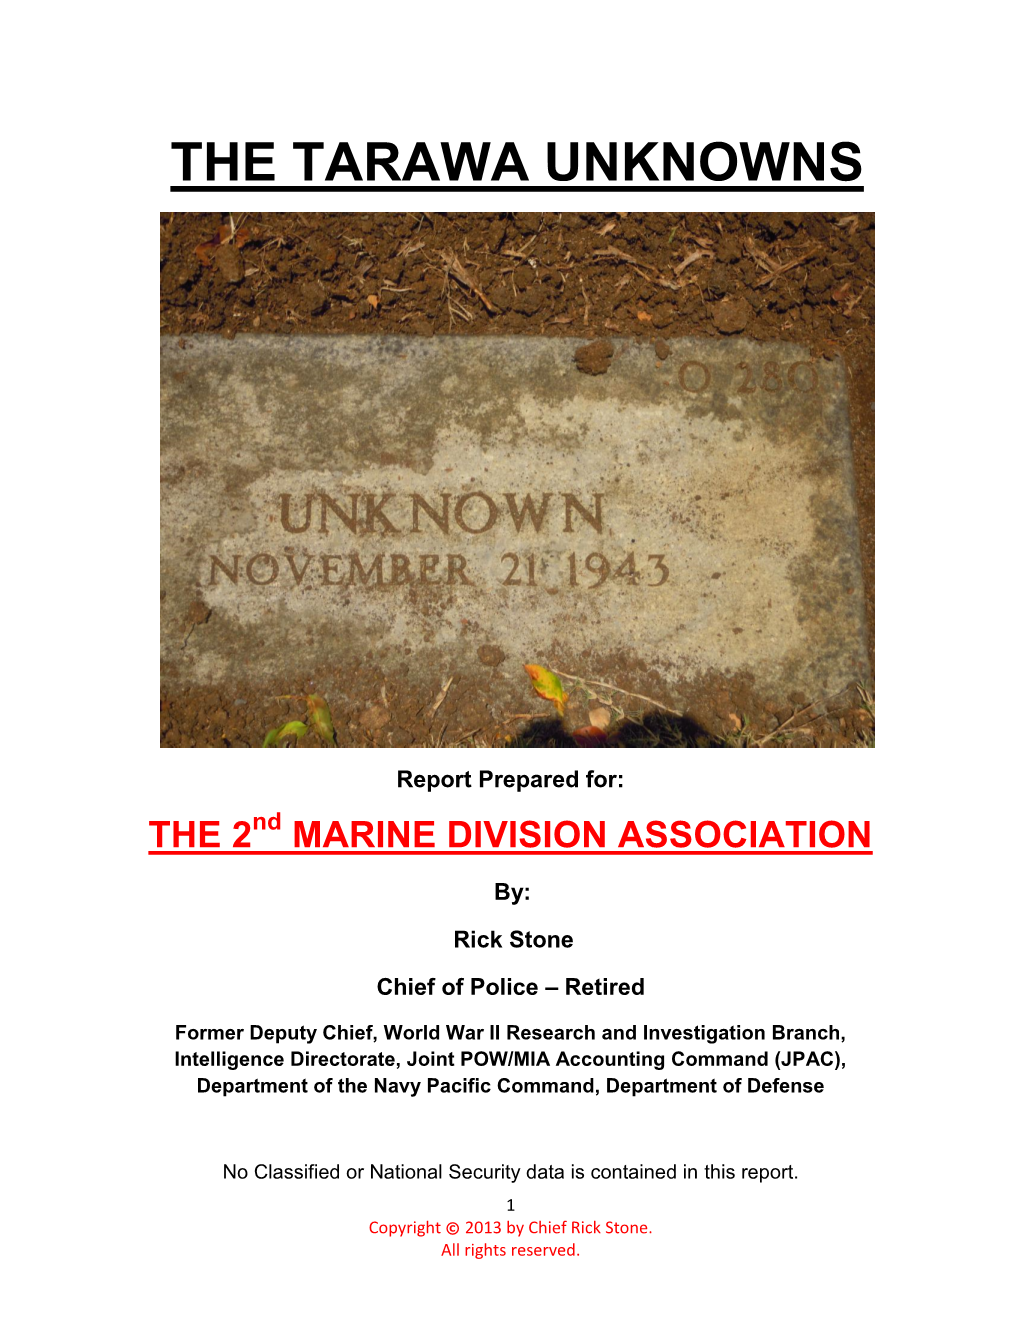 The Tarawa Unknowns